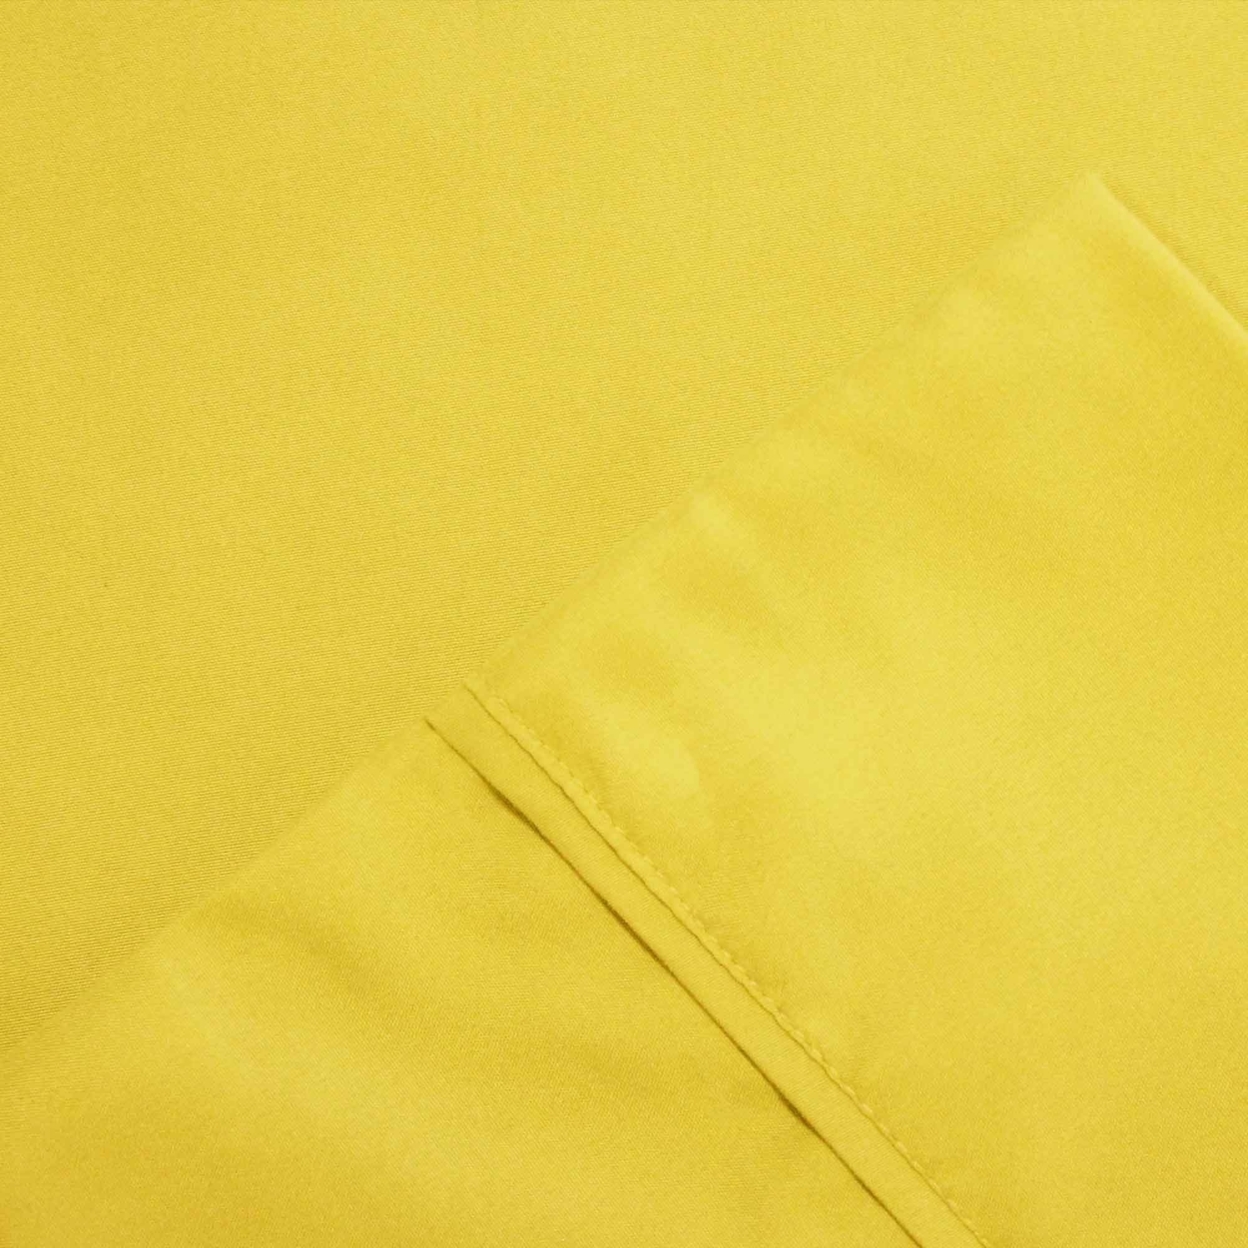 Bezons 4 Piece King Size Microfiber Sheet Set With 1800 Thread Count, Yellow- Saltoro Sherpi